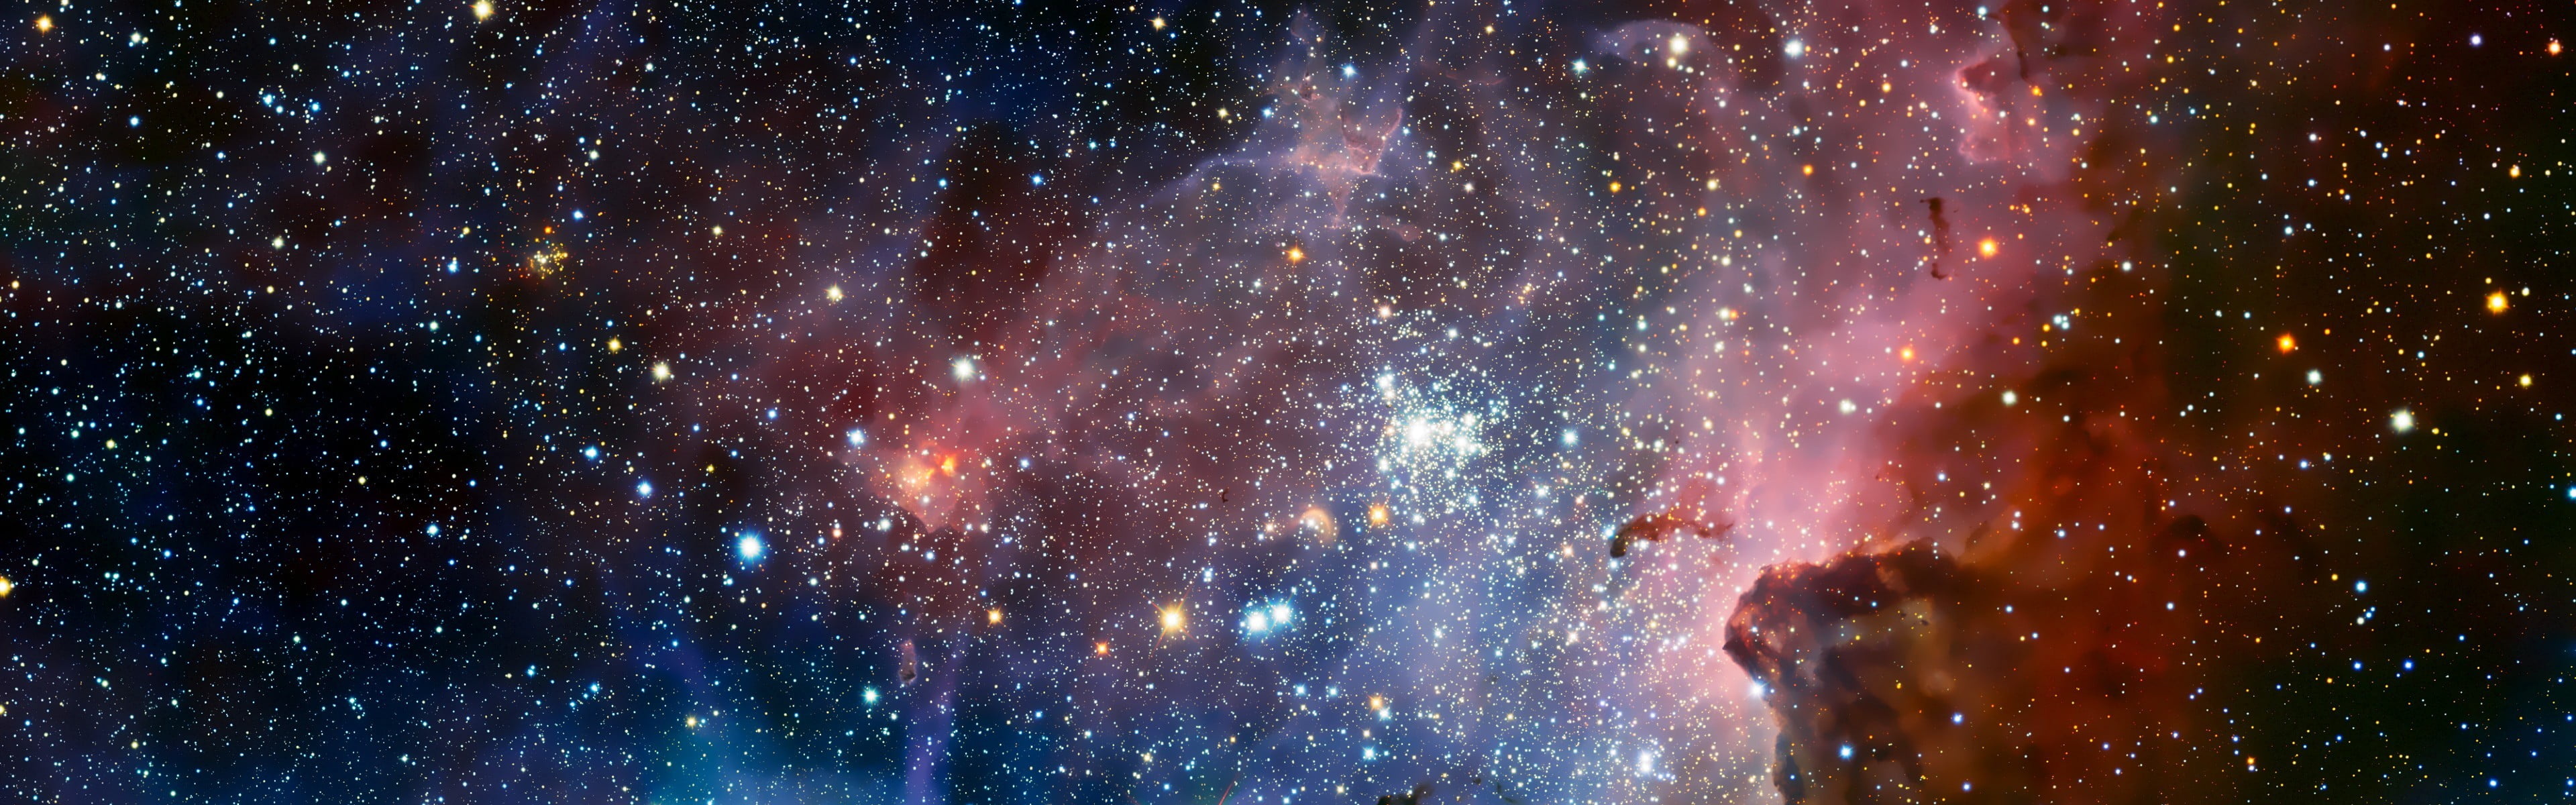 Hubble revelations, Galaxy enchantment, Stunning space art, Cosmic spectacle, 3840x1200 Dual Screen Desktop